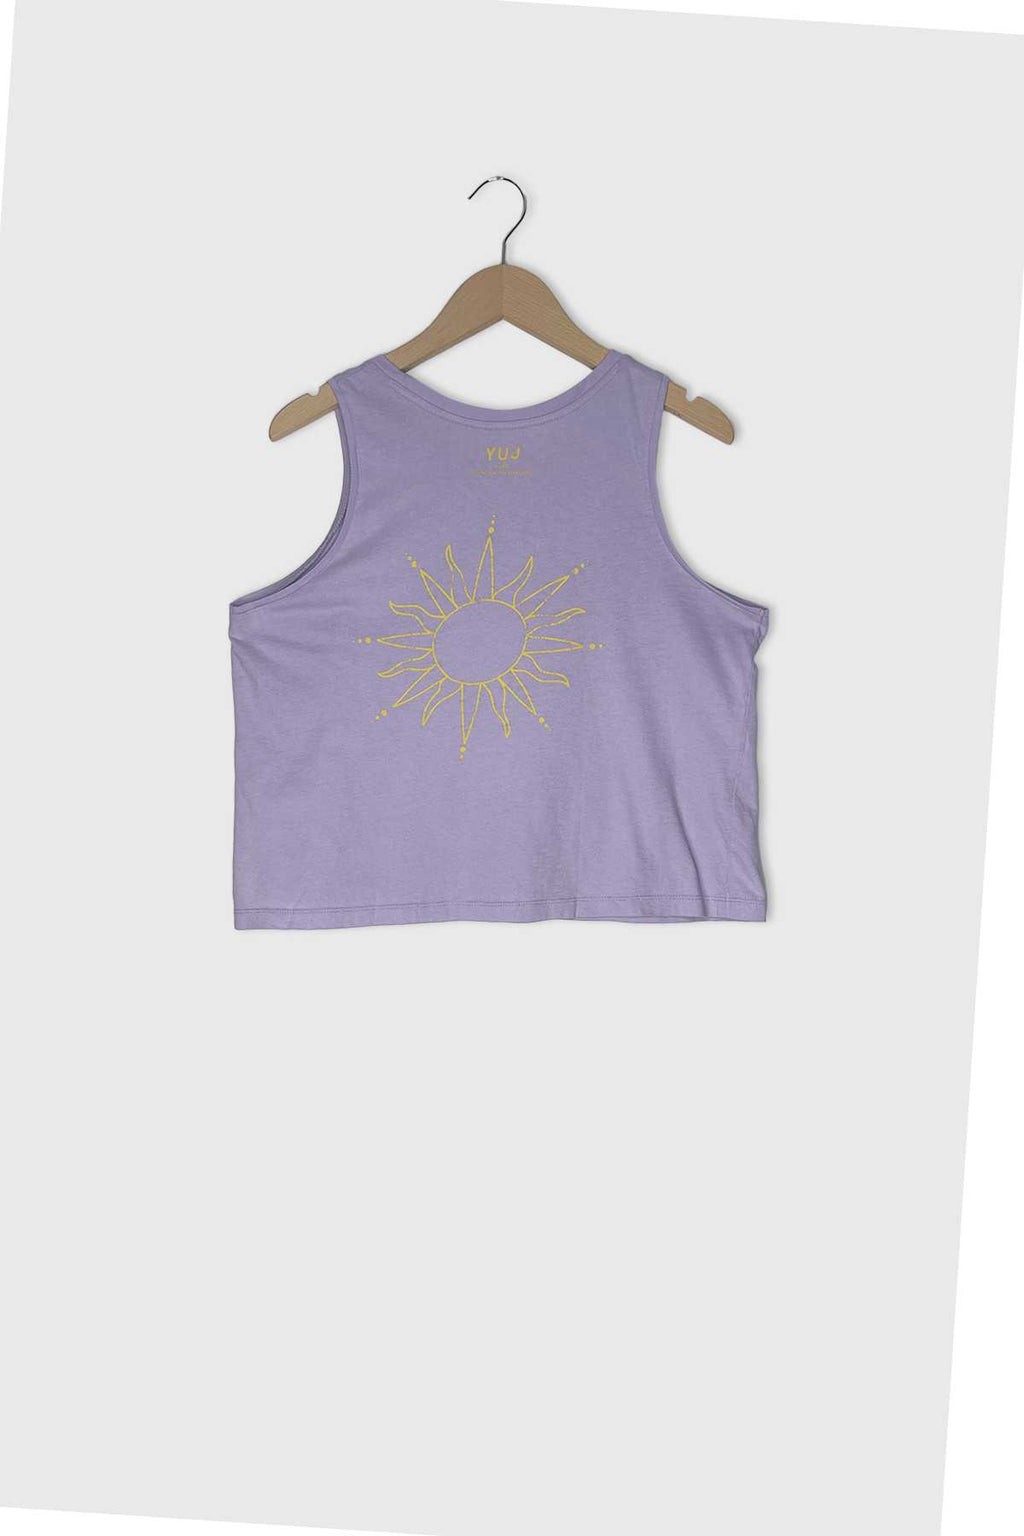 #194 - Camiseta SPIRIT SISTERS // Talla S YUJ - House of Mindfulness